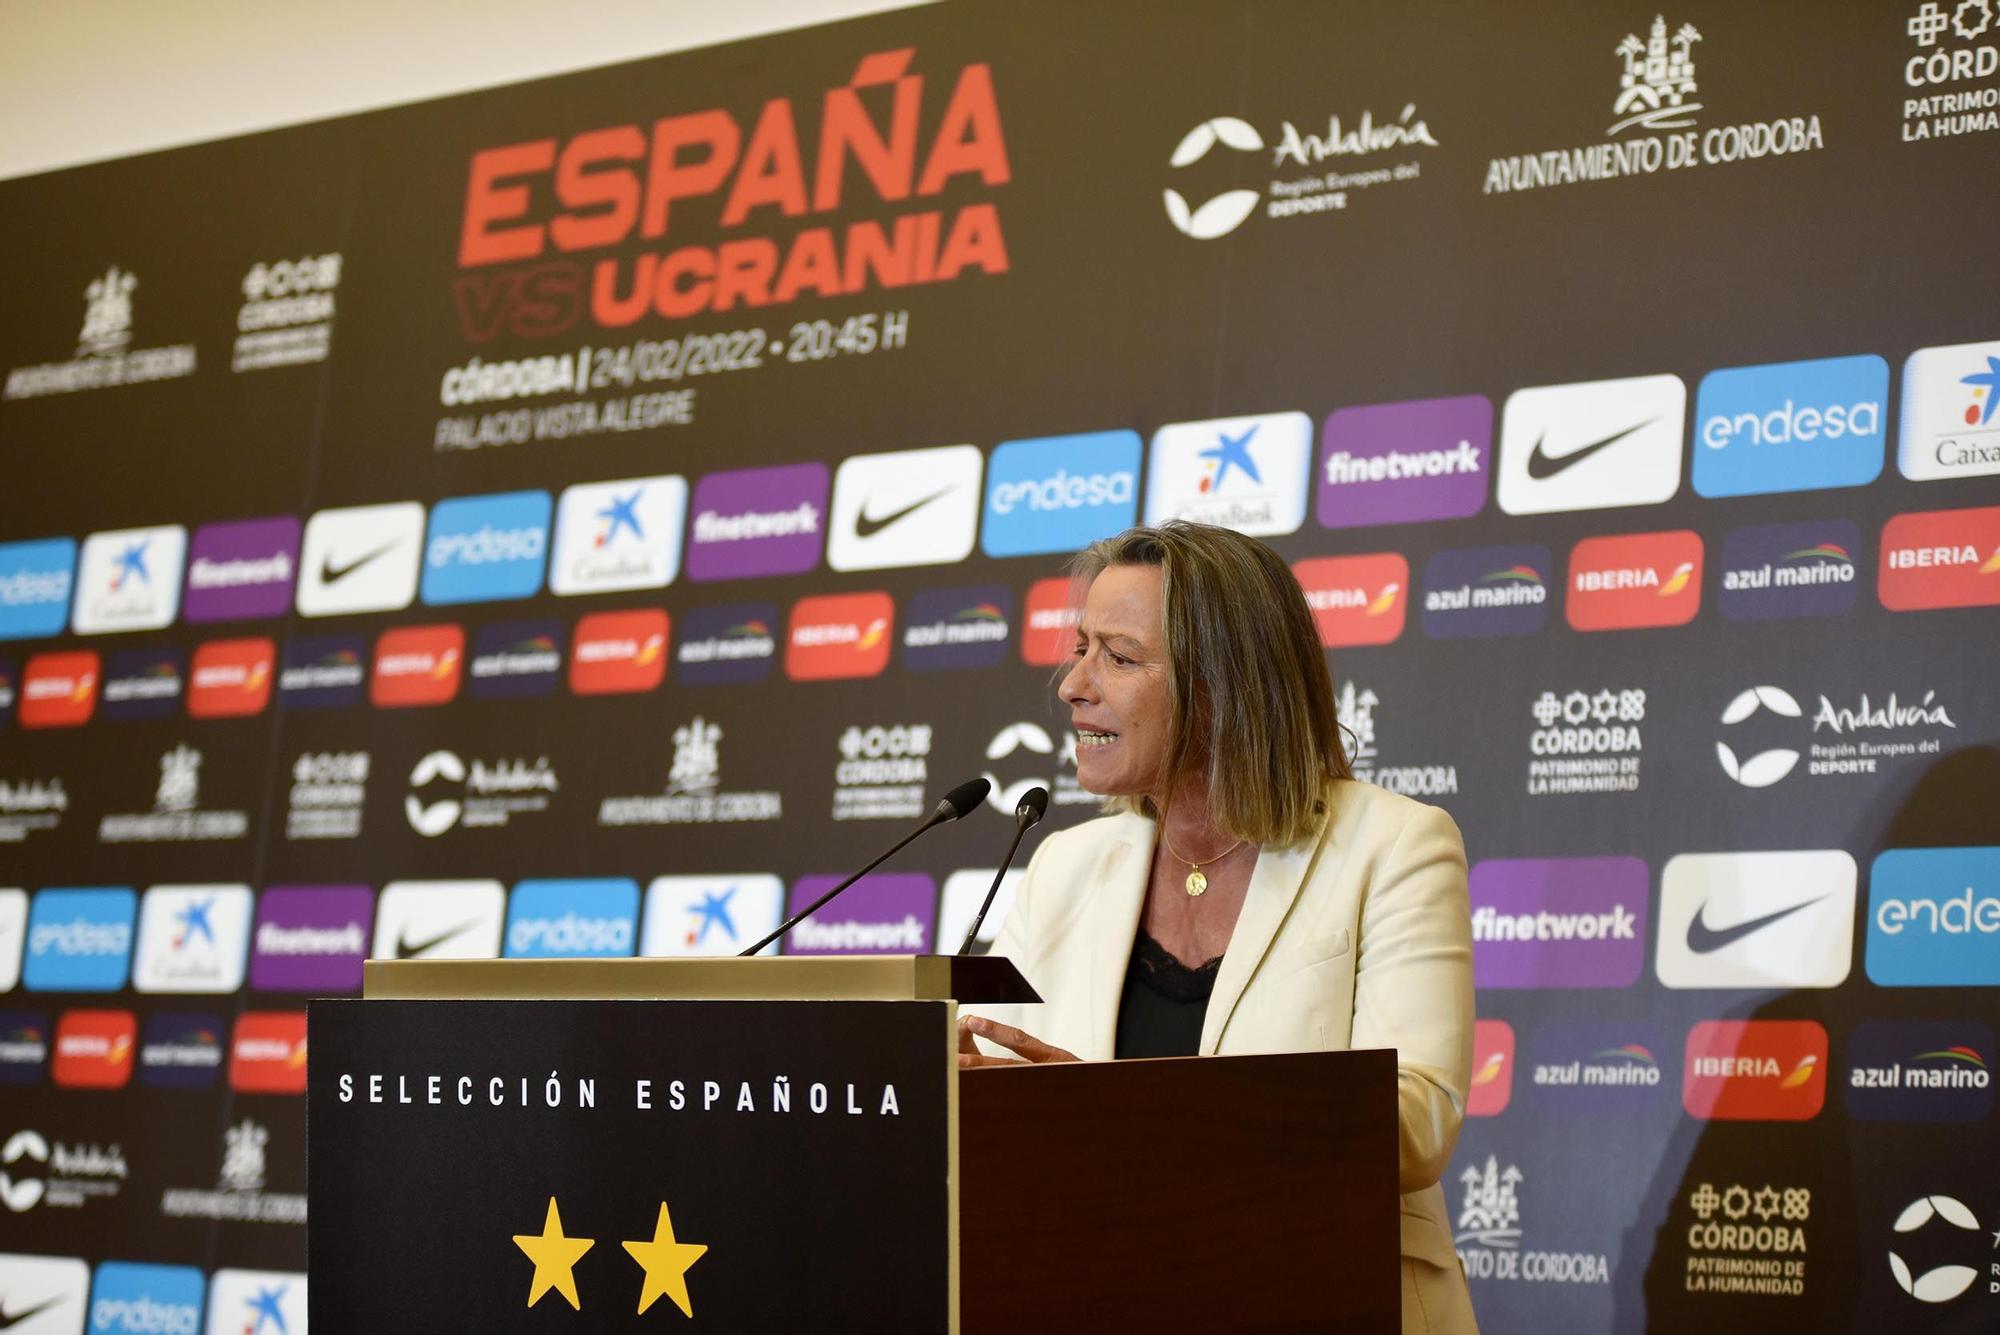 Presentación del partido España-Ucrania de baloncesto